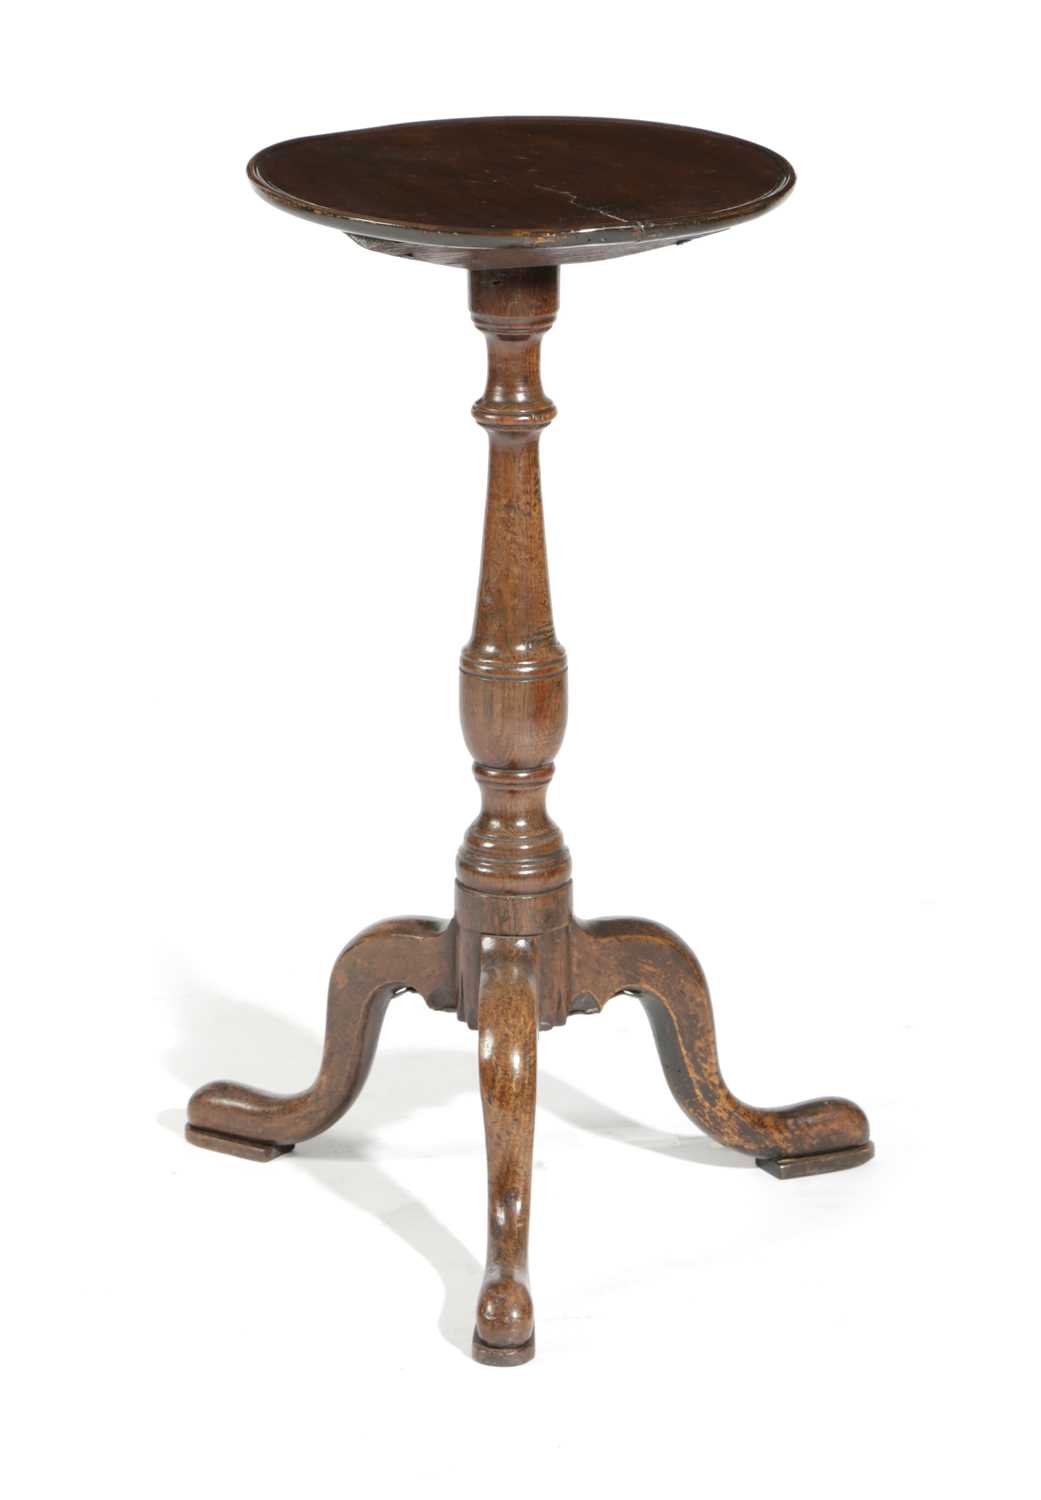 A GEORGE III TRIPOD TABLE C.1770 the circular dished fruitwood top above an oak base 68.5cm high,